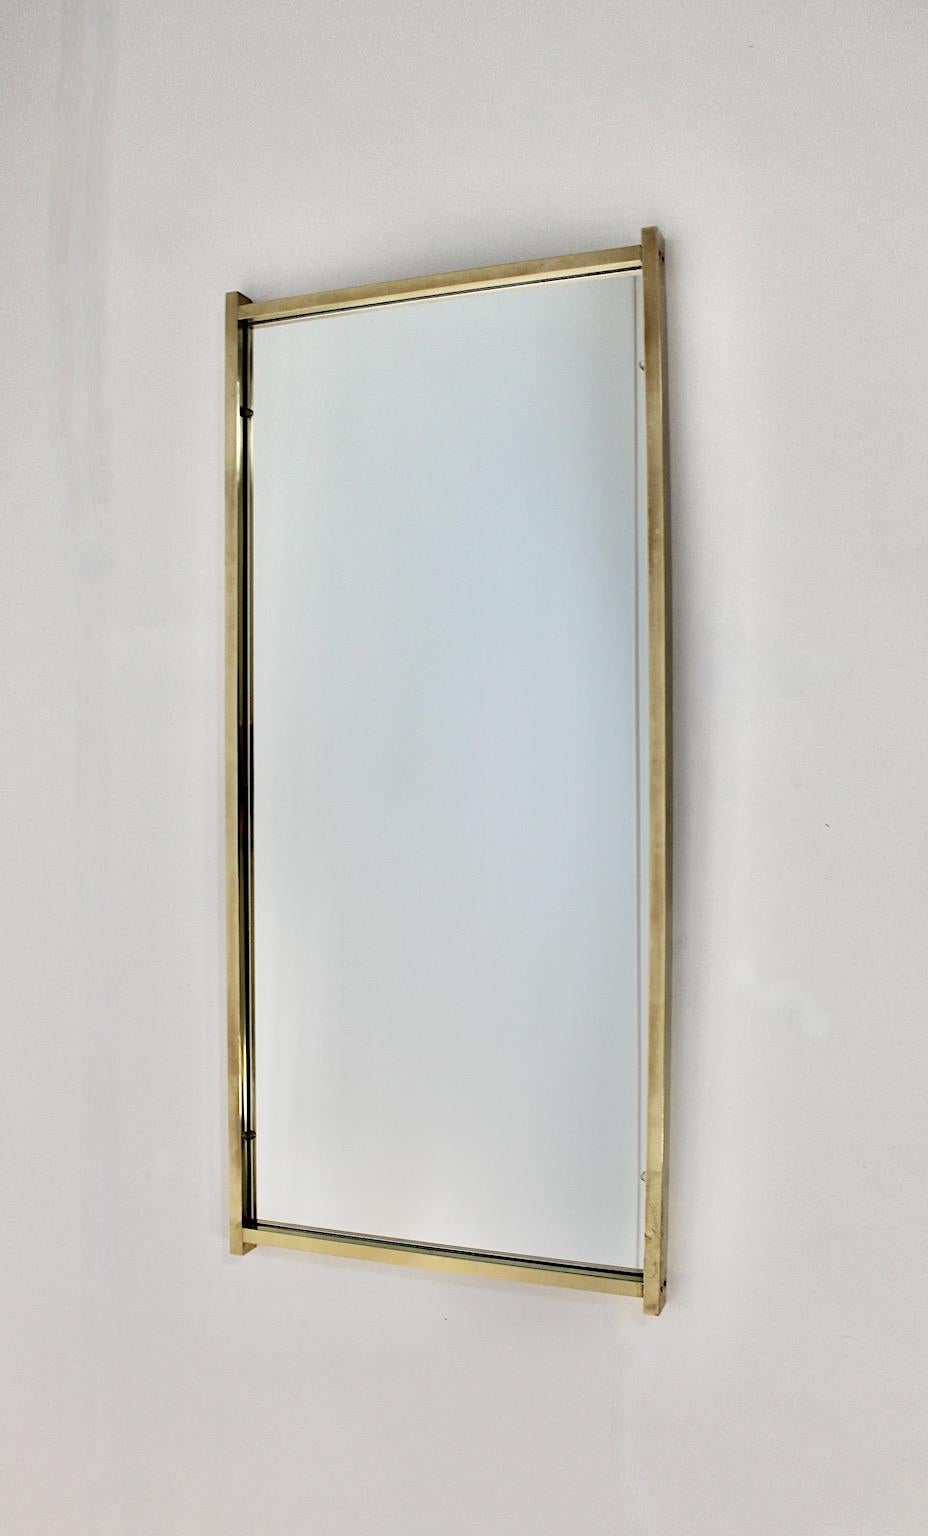 Italian Modernist Vintage Rectangular Brass Wall Mirror Floor Mirror 1970s Italy For Sale